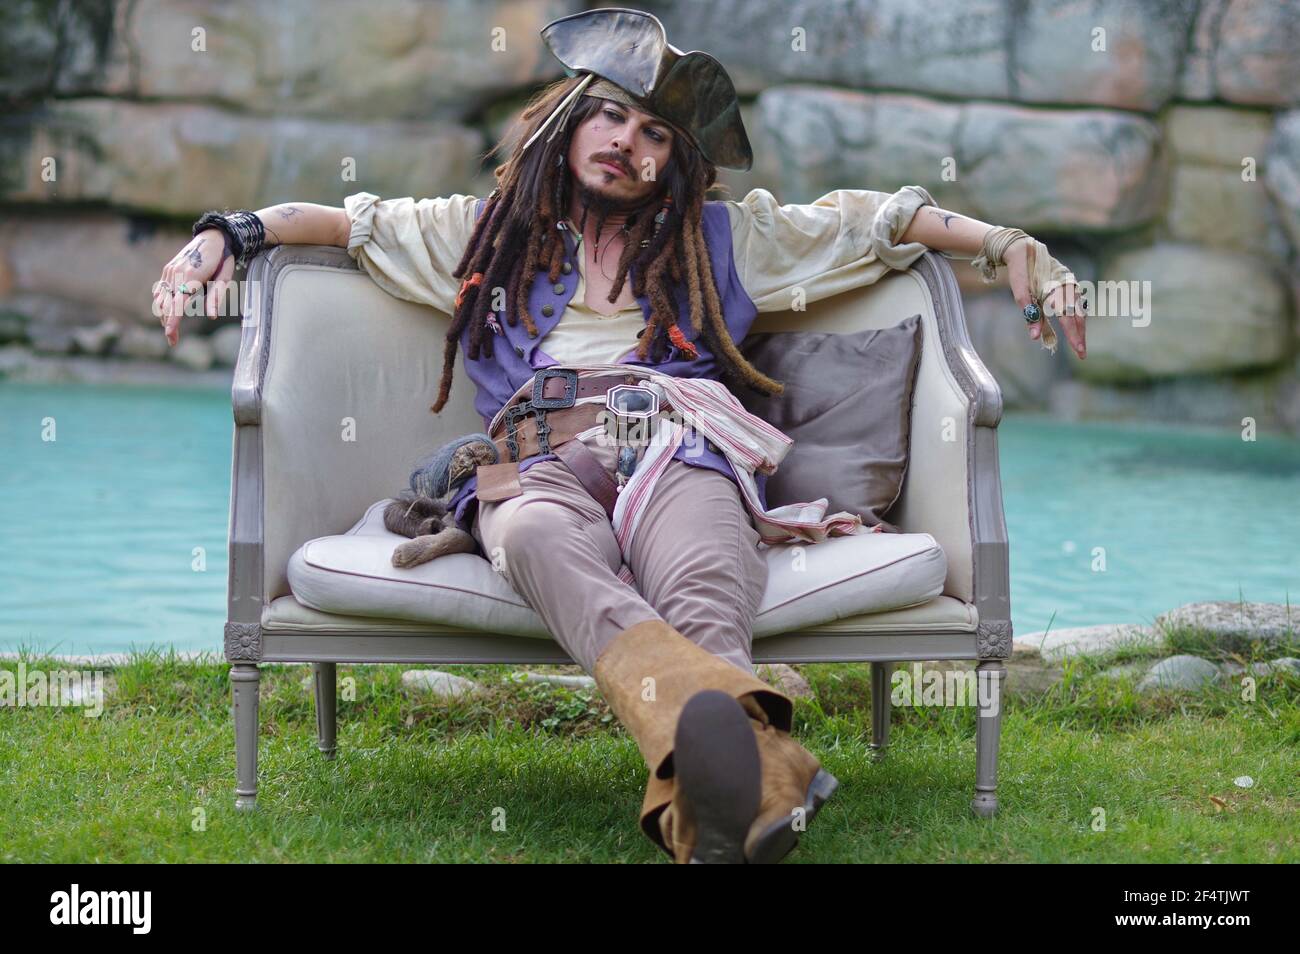 Jack sparrow costume -Fotos und -Bildmaterial in hoher Auflösung – Alamy